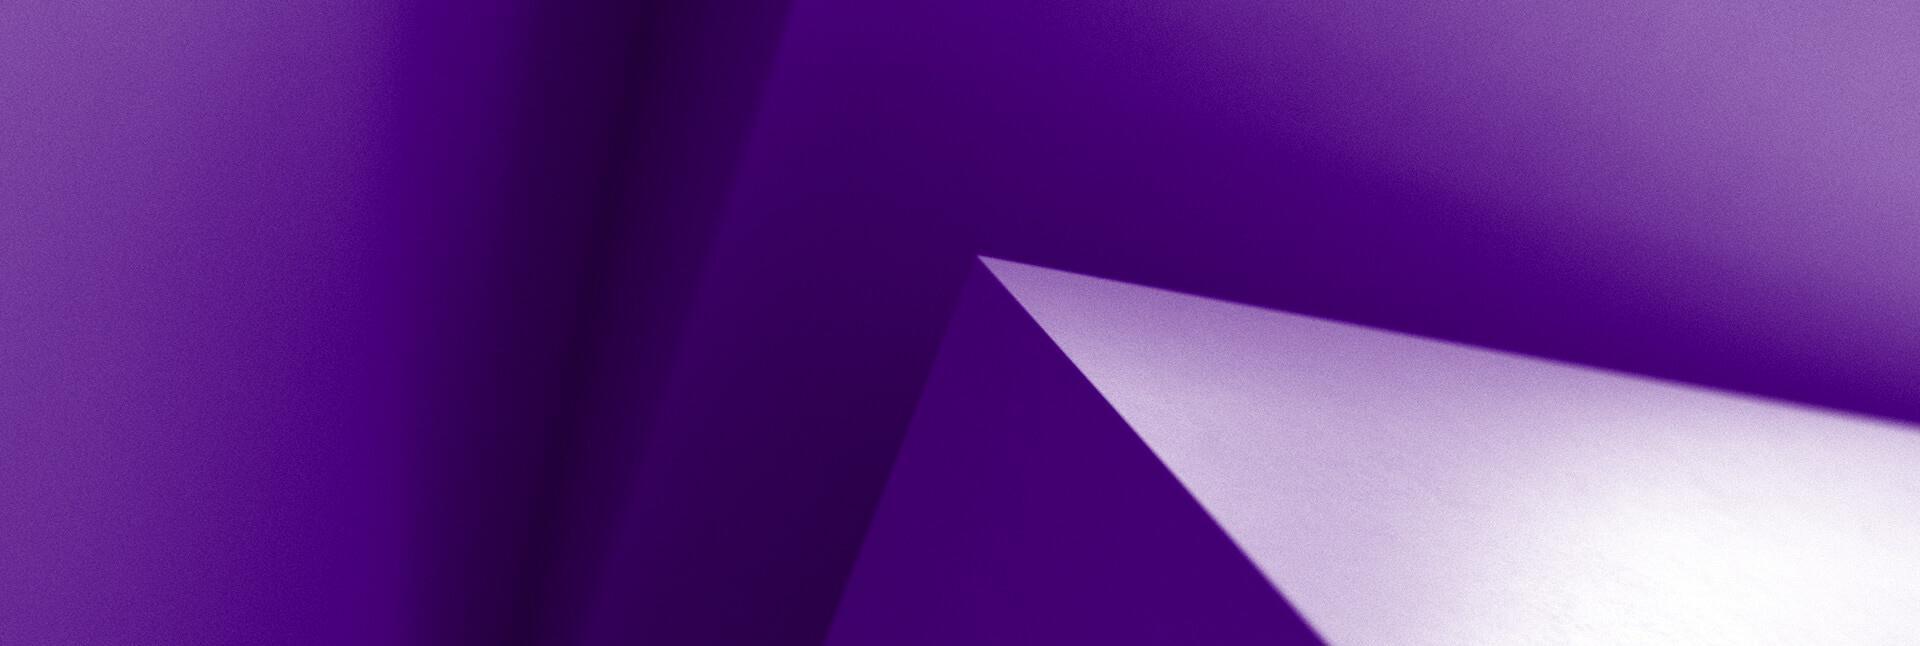 rra-background-purple-3-2018.jpg